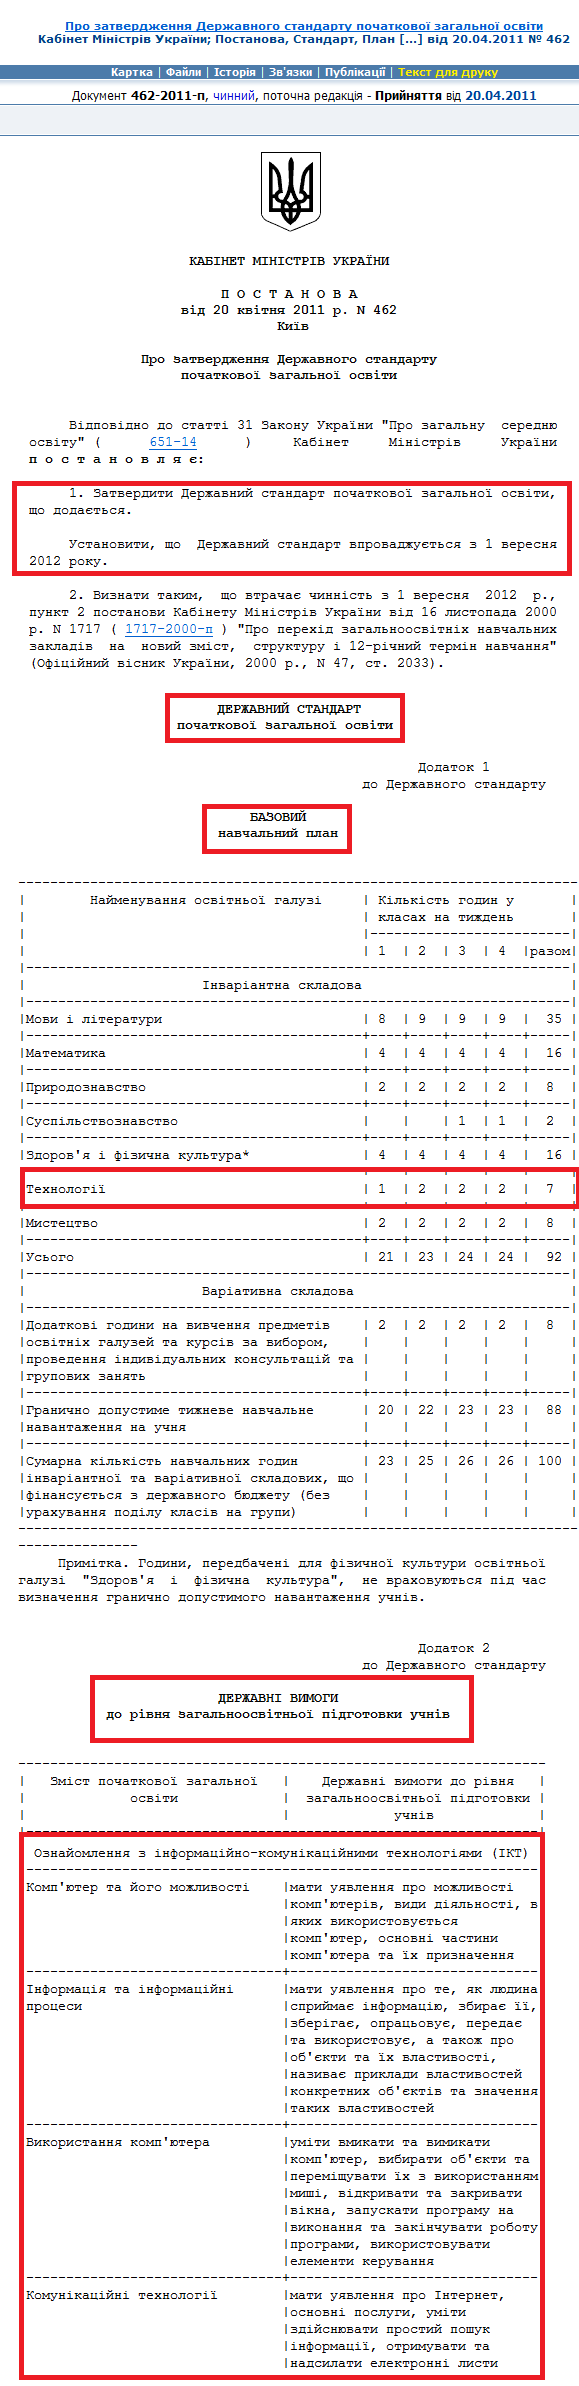 http://zakon2.rada.gov.ua/laws/show/462-2011-%D0%BF/print1329901621588623